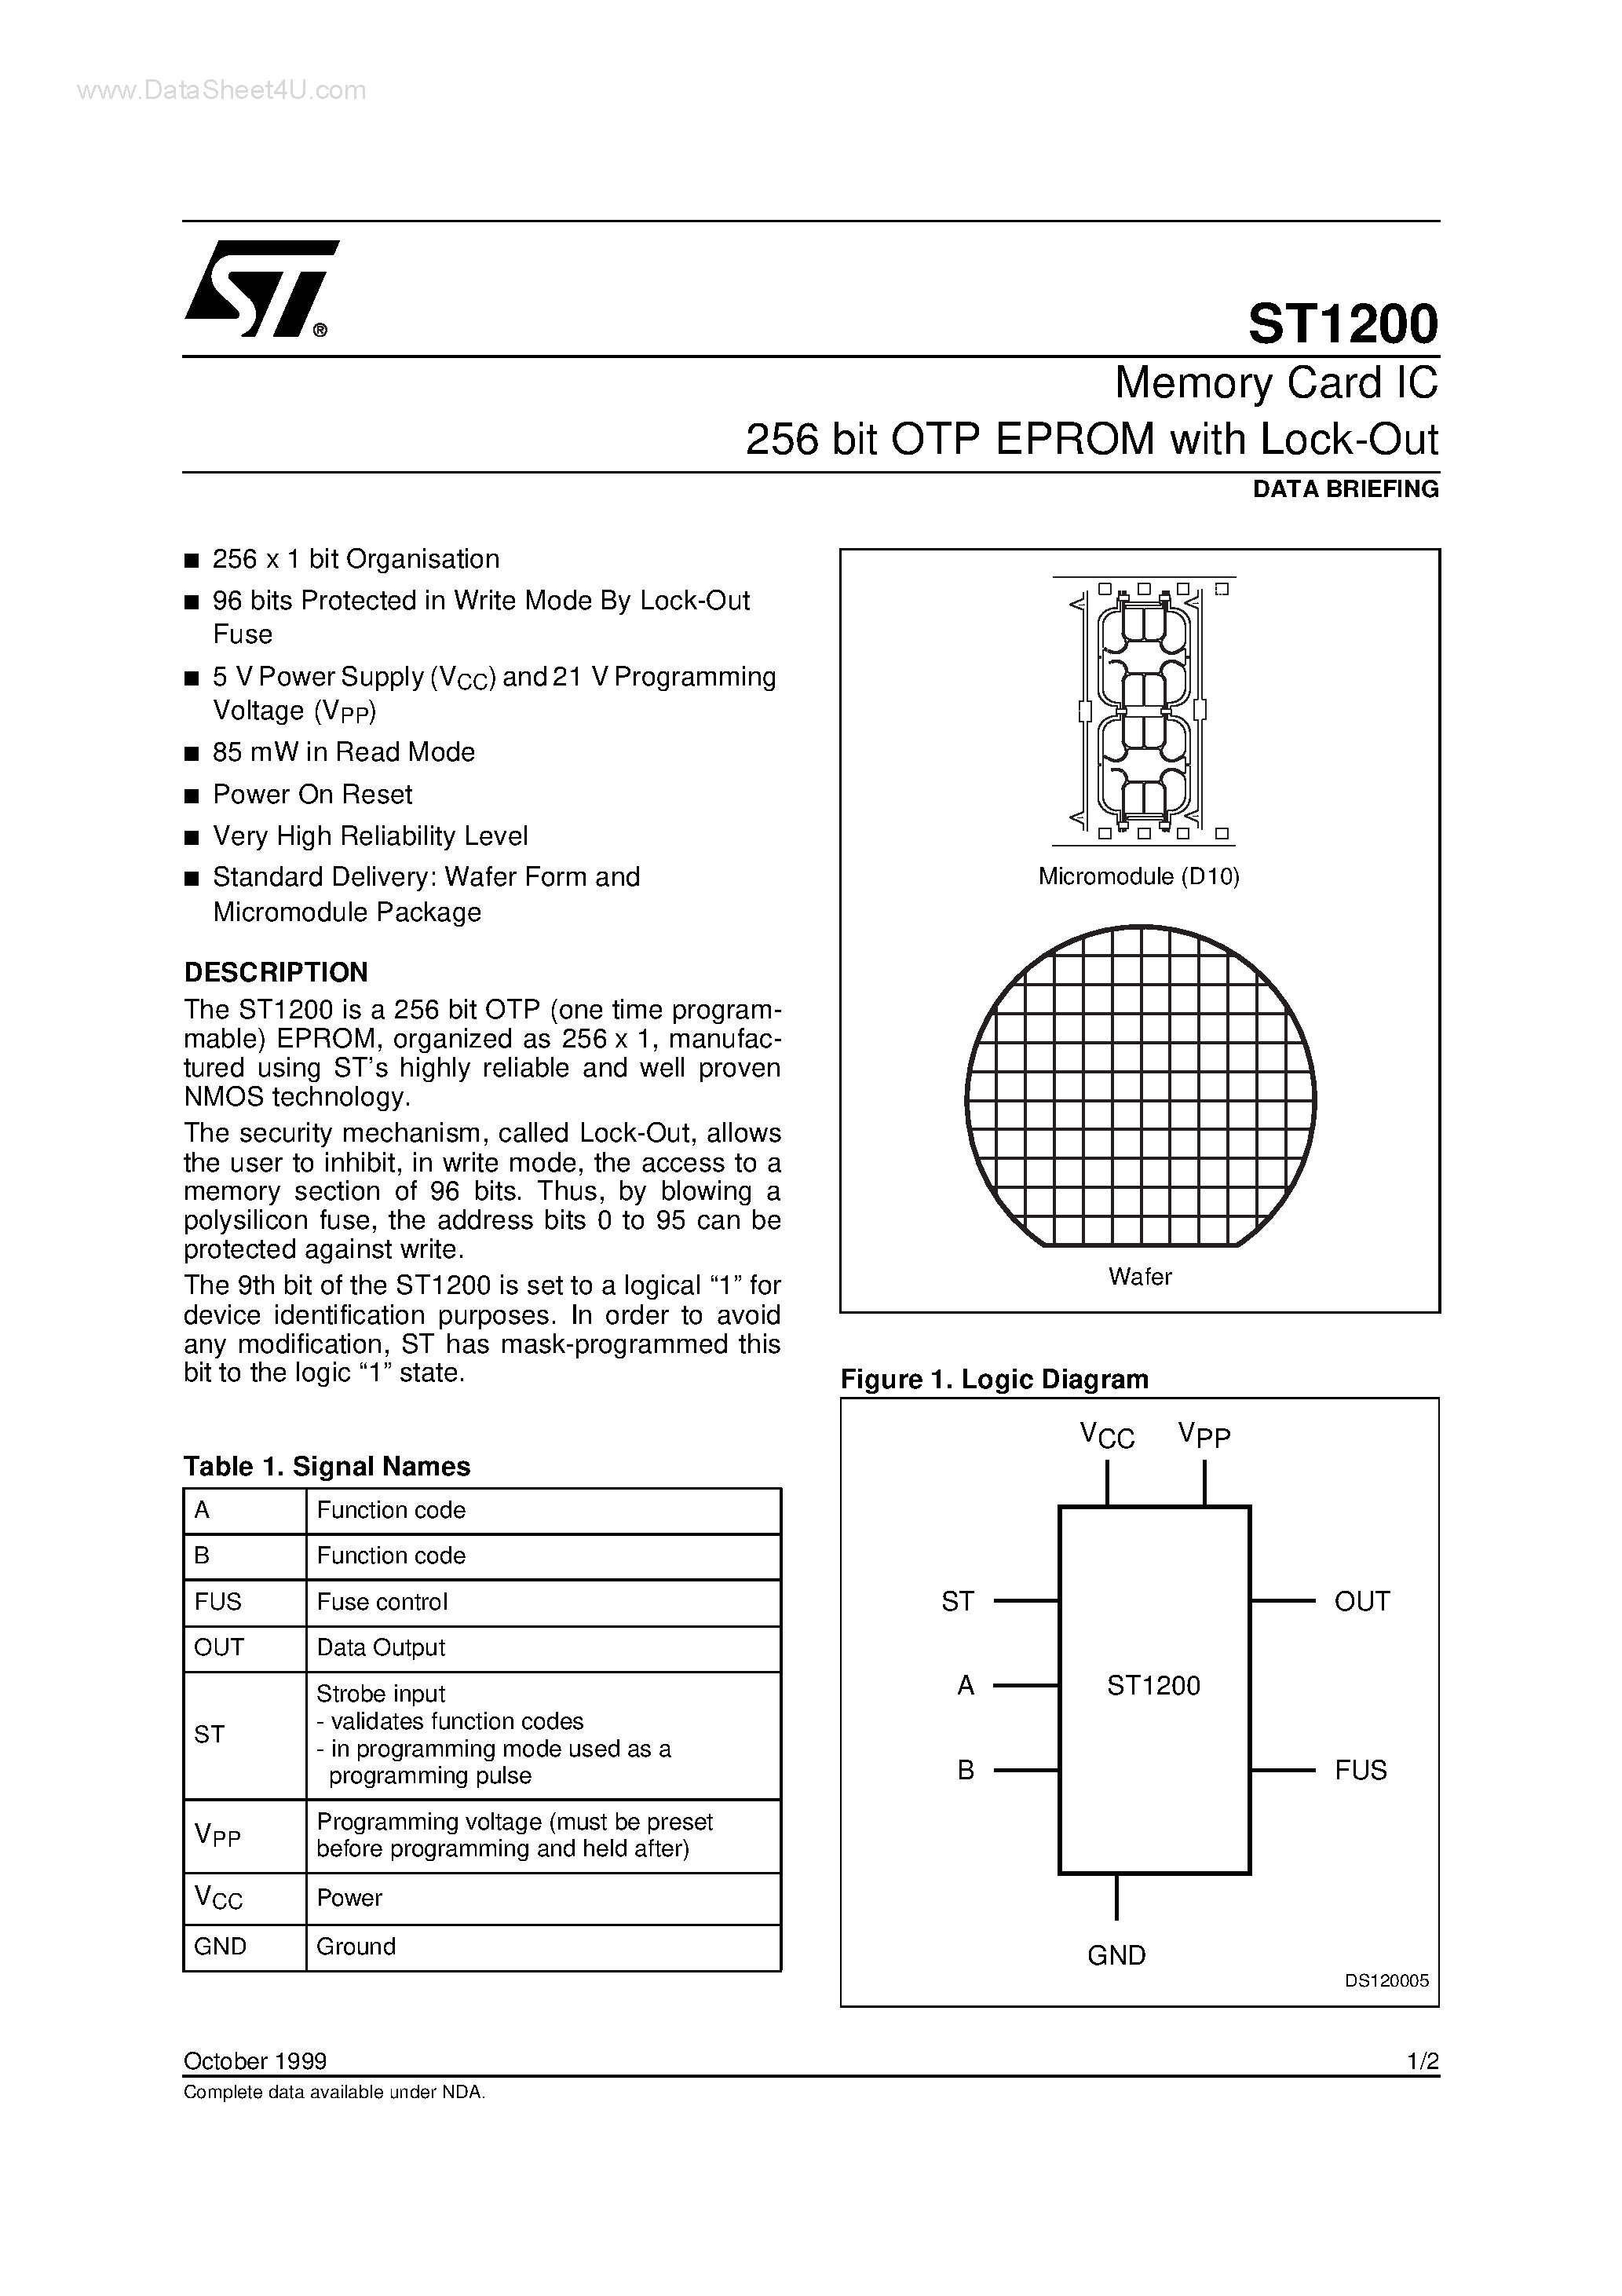 Datasheet ST1200 - Memory Card IC 256 bit OTP EPROM page 1